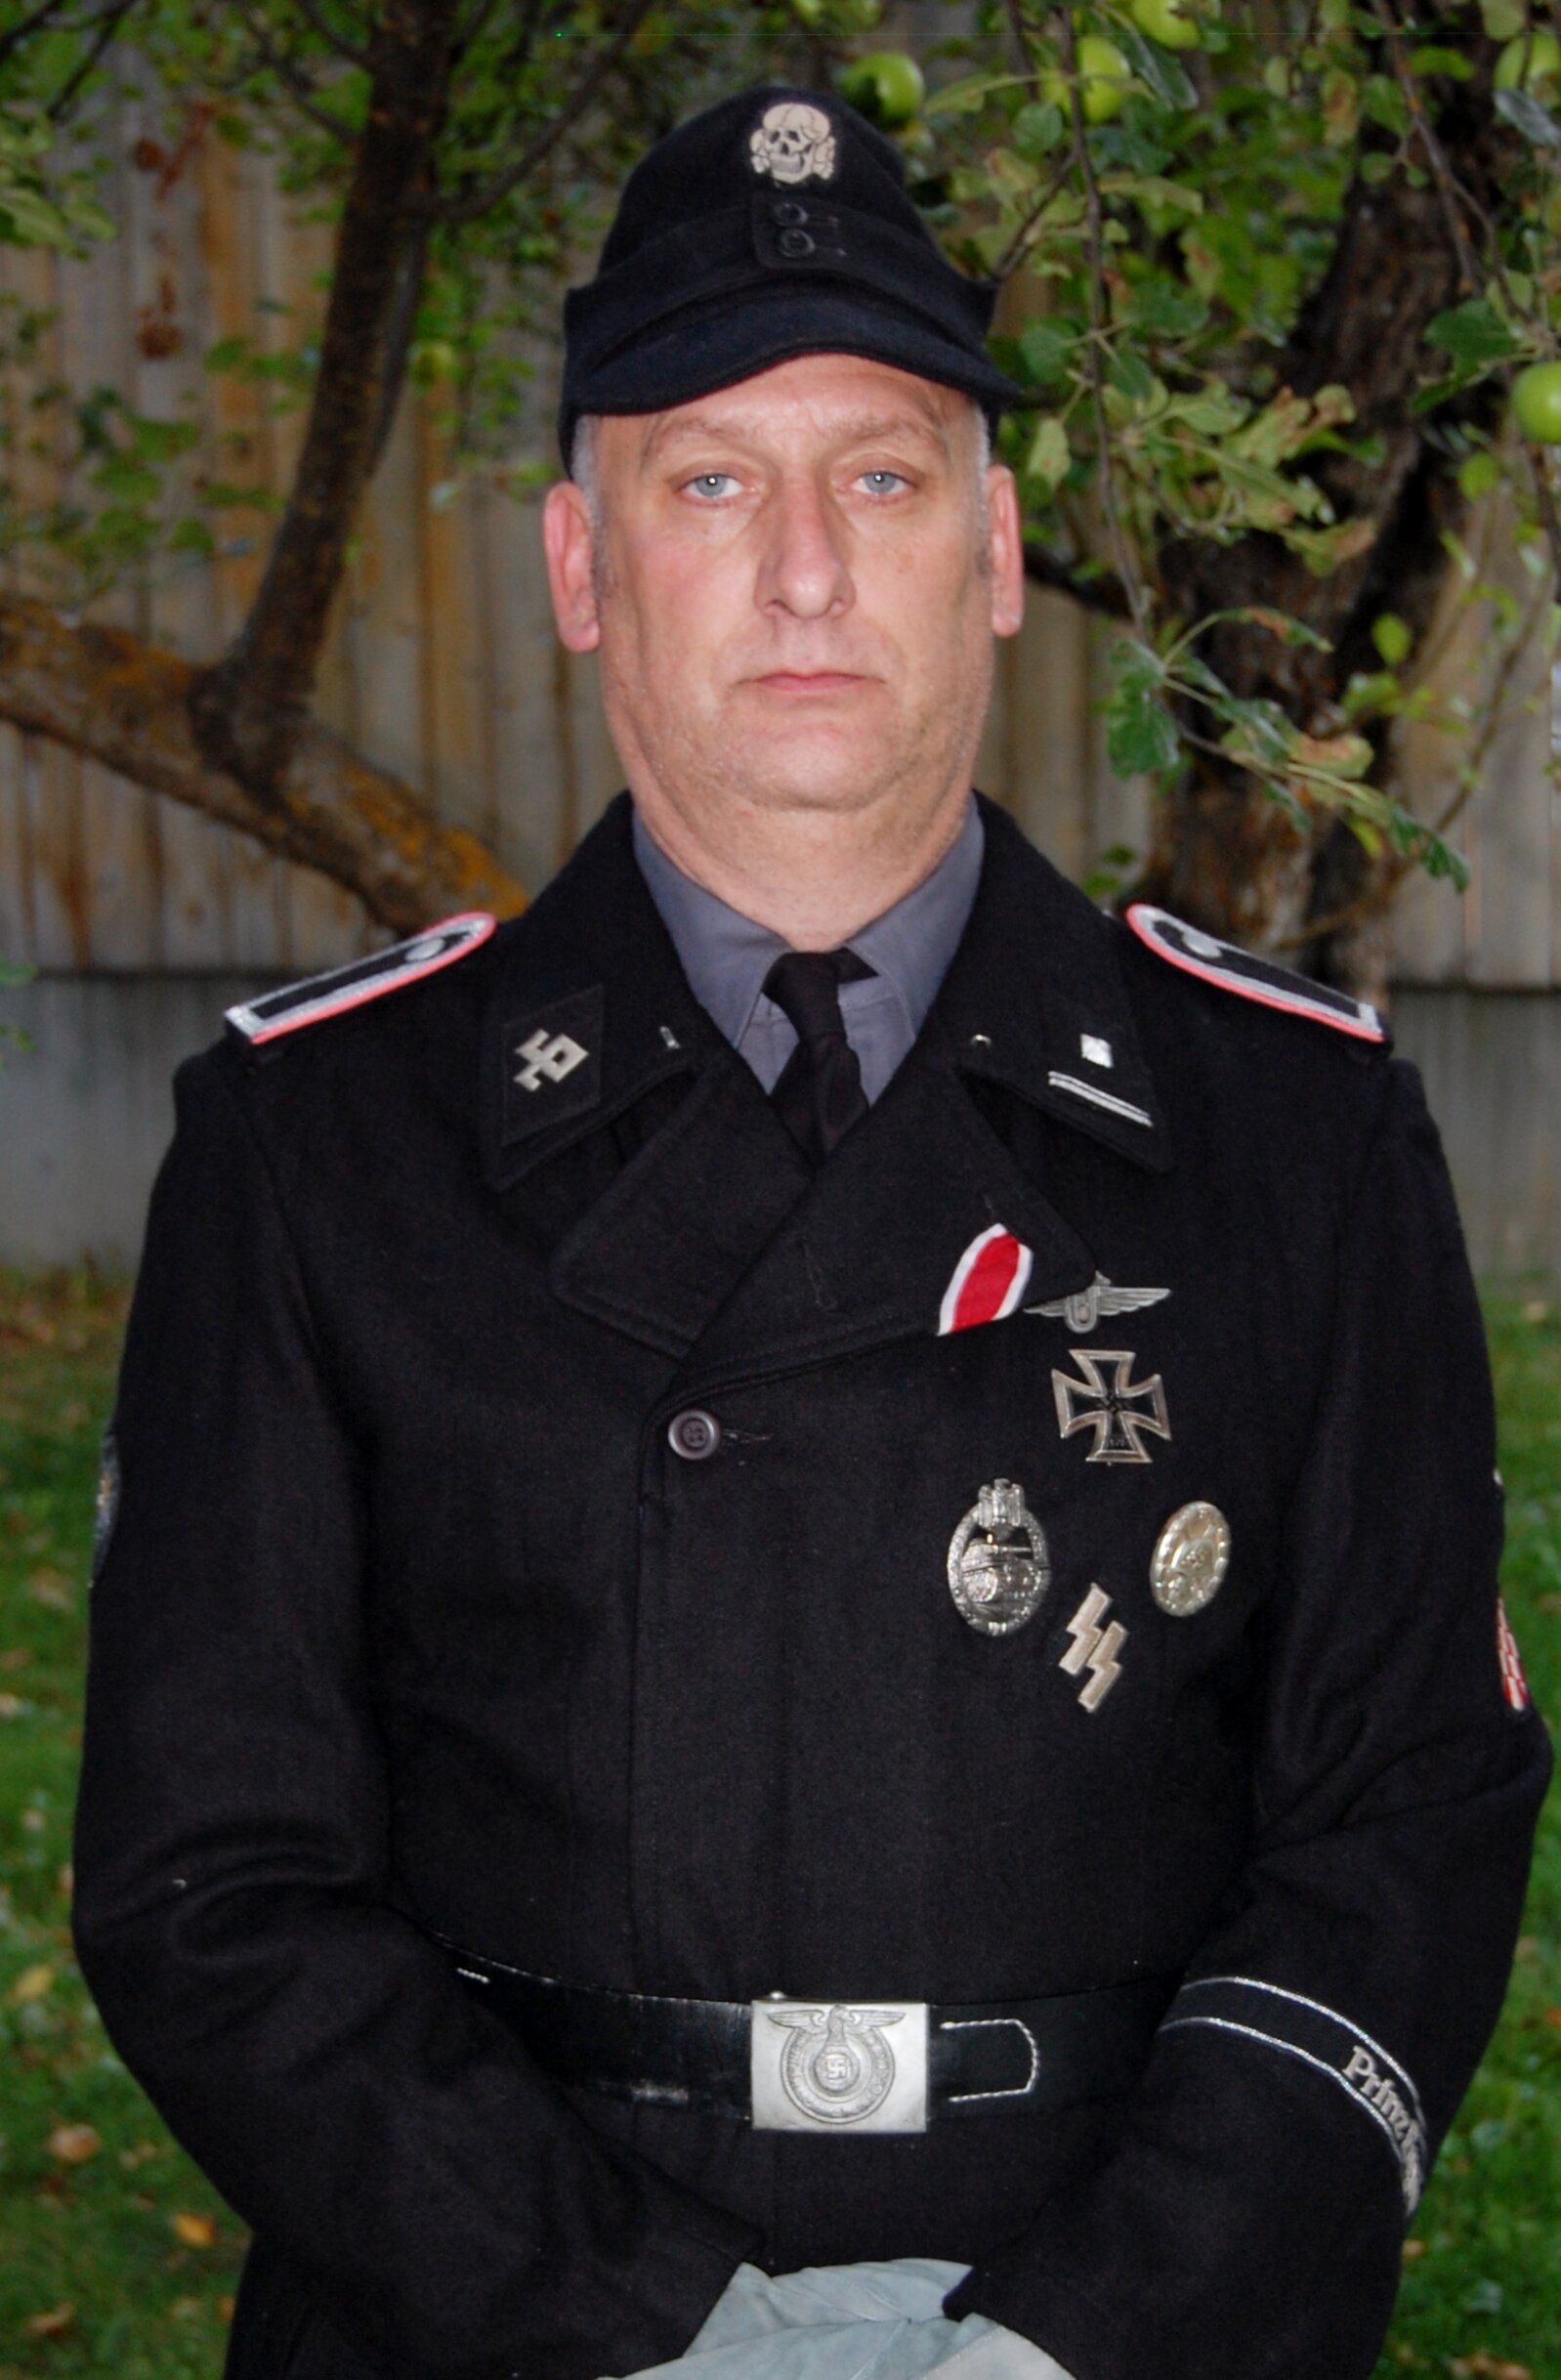 Prinz Eugan Pz. Officer (15).jpg